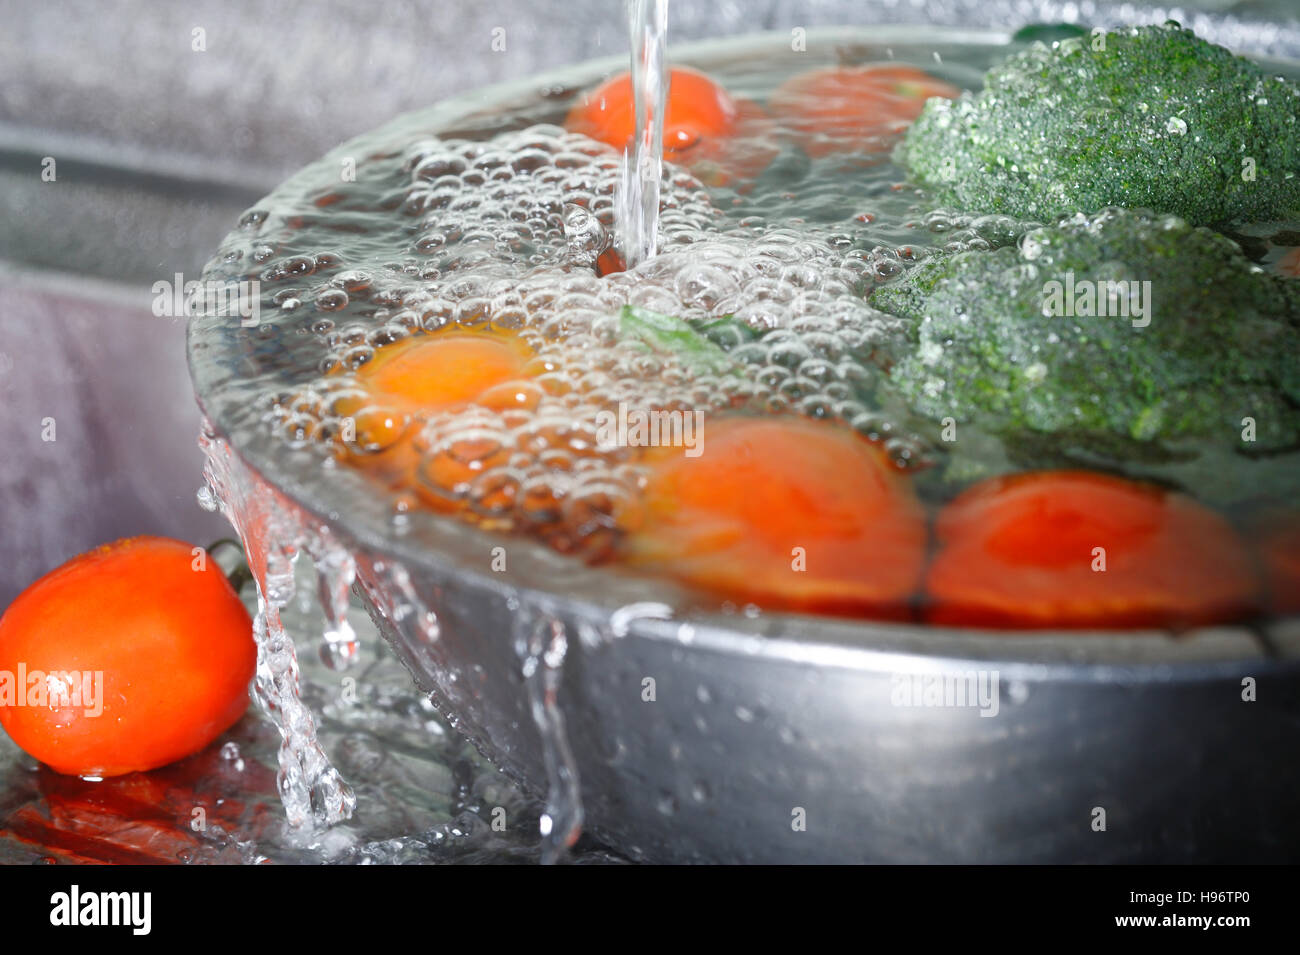 Lavar verdura fresca en el fregadero Foto de stock